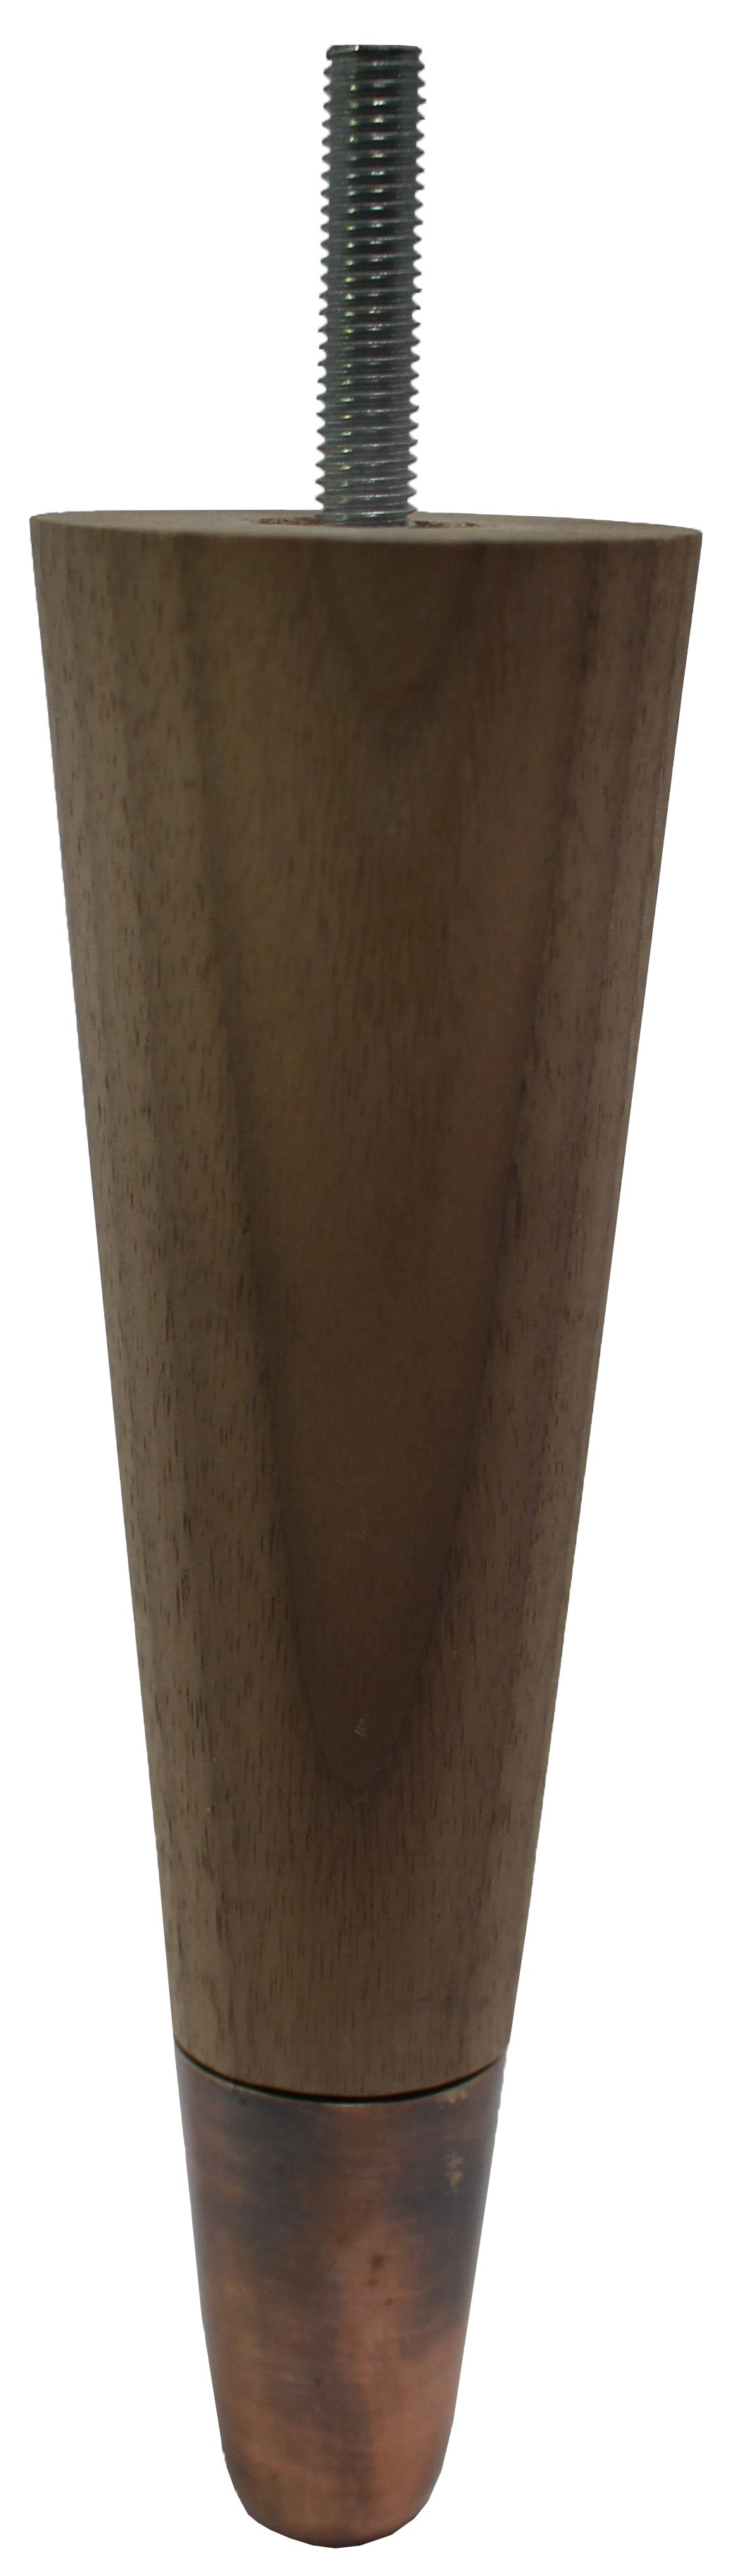 Agata Solid Walnut Tapered Furniture Legs - Raw Finish - Antique Copper Slipper Cups - Set of 4